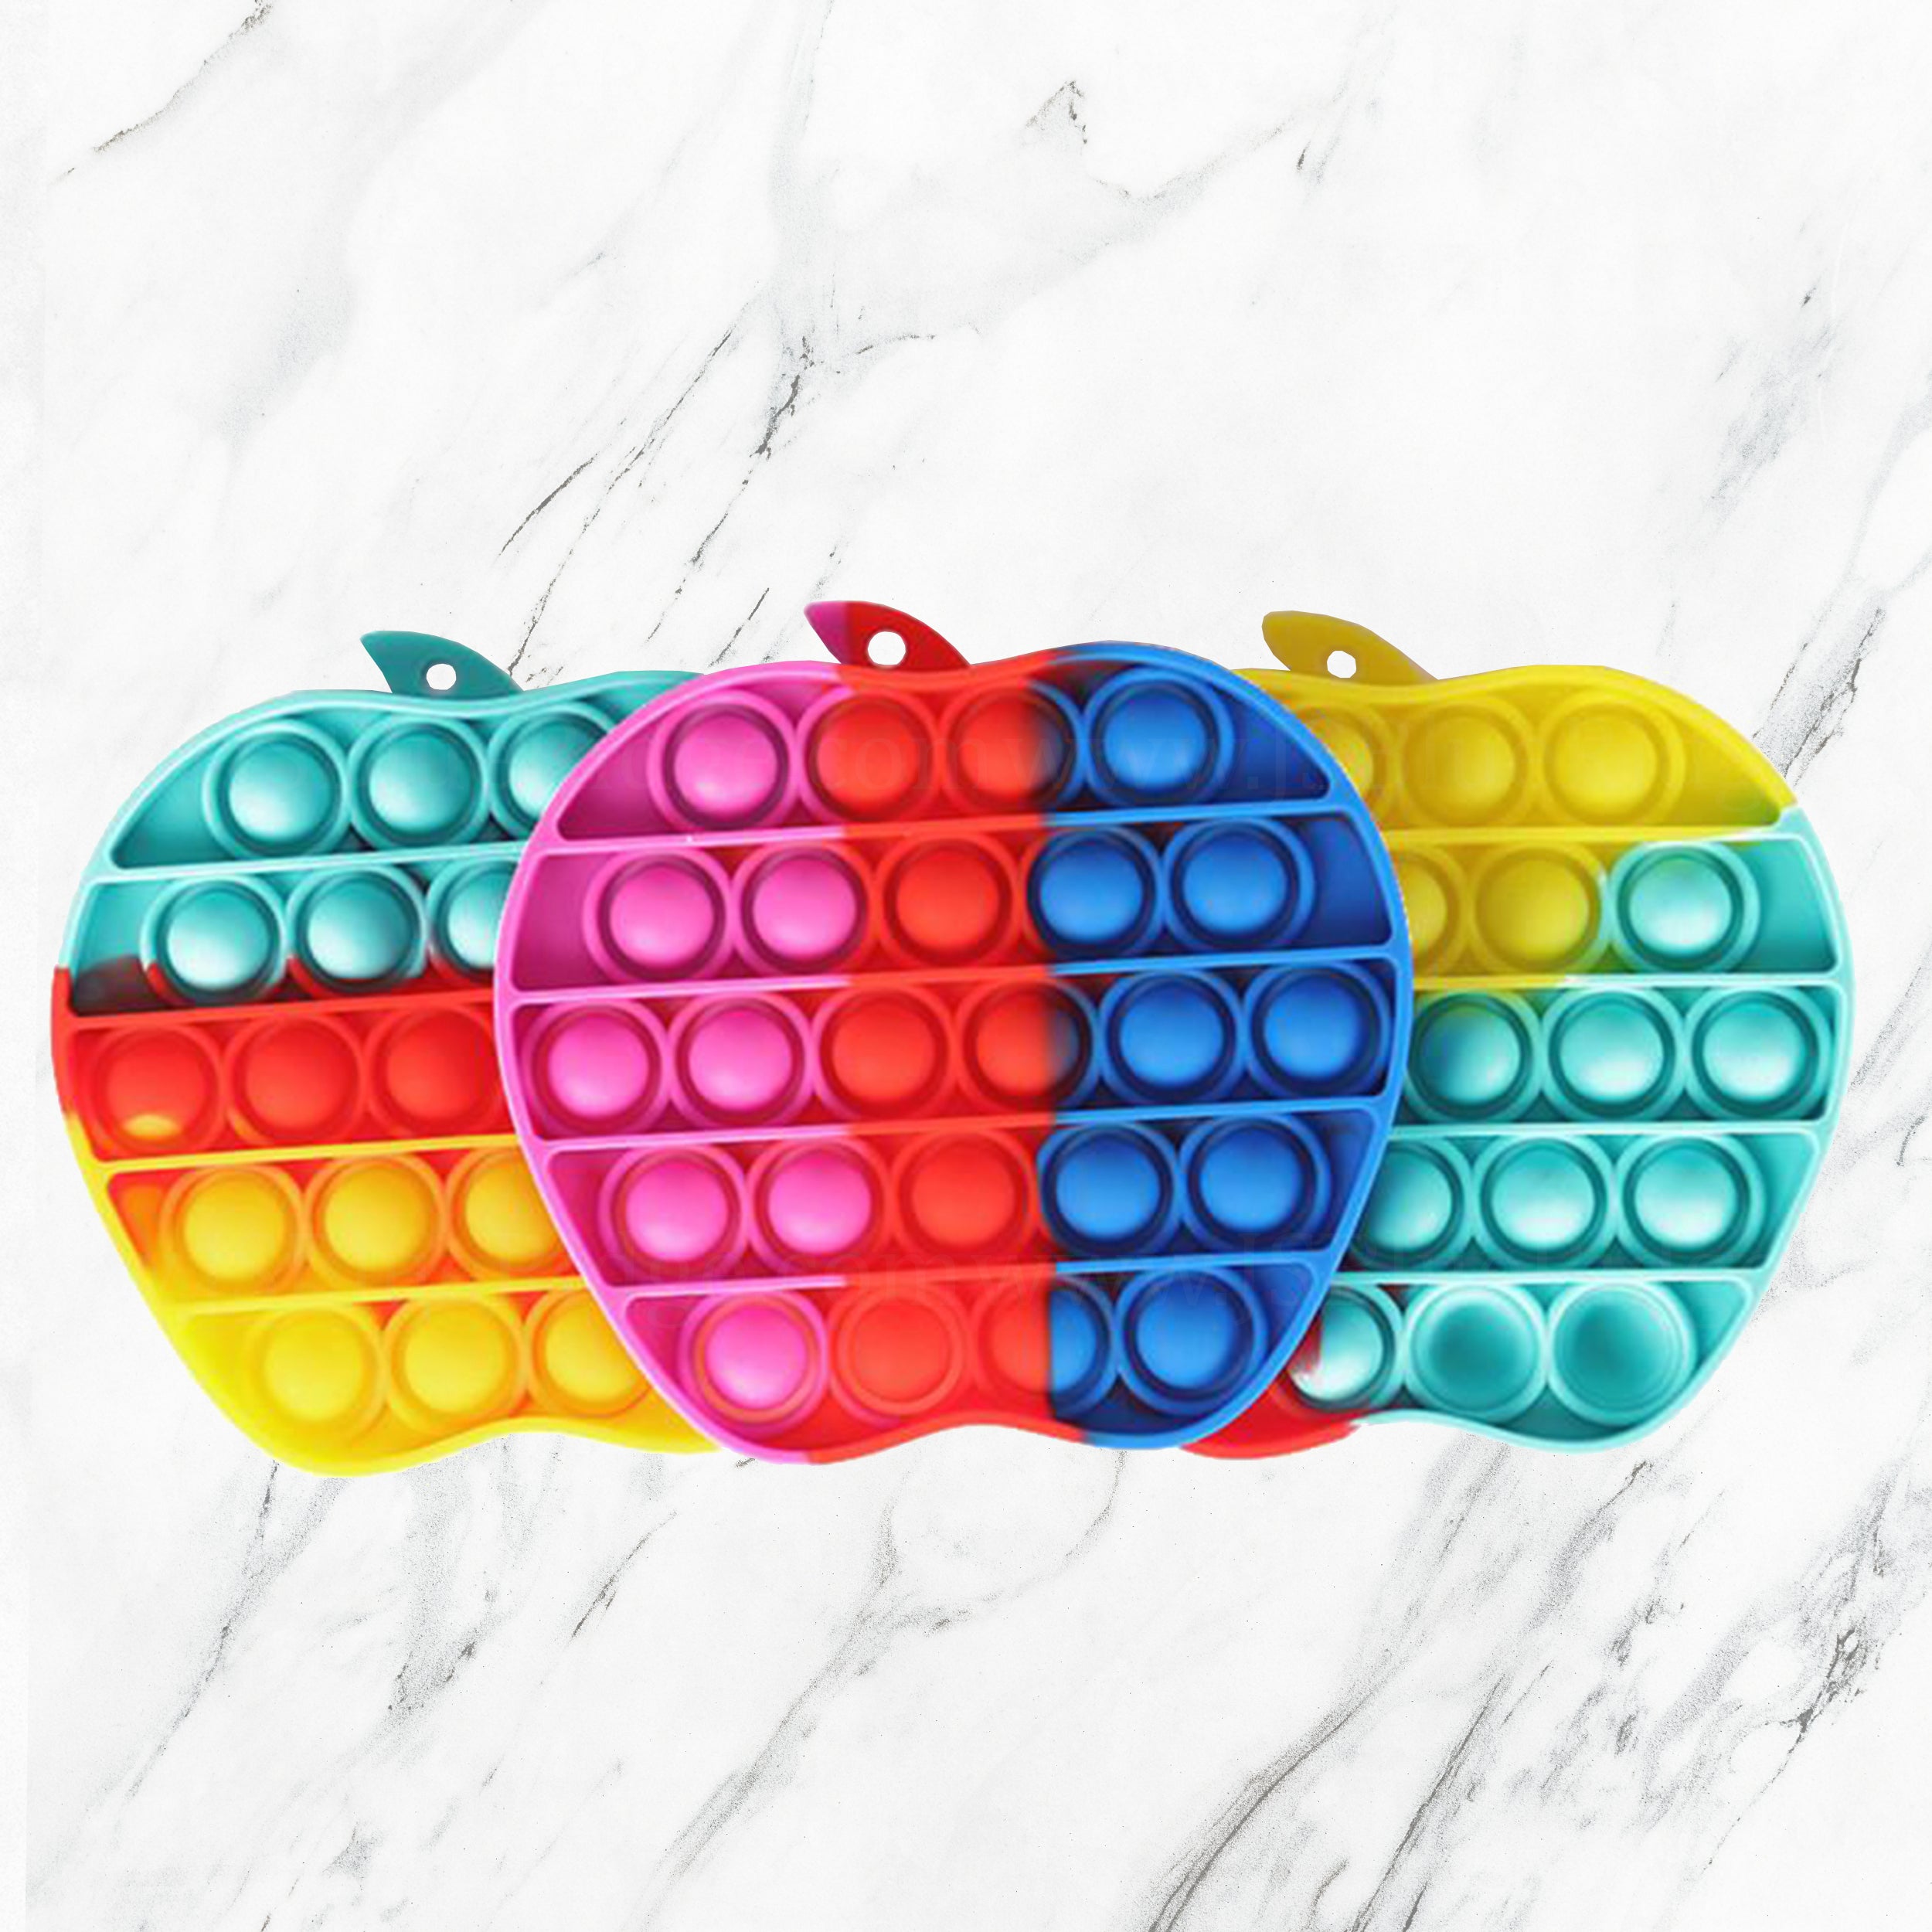 Rainbow Apple Pop It Toy for Kids - Sensory Fidget Toy